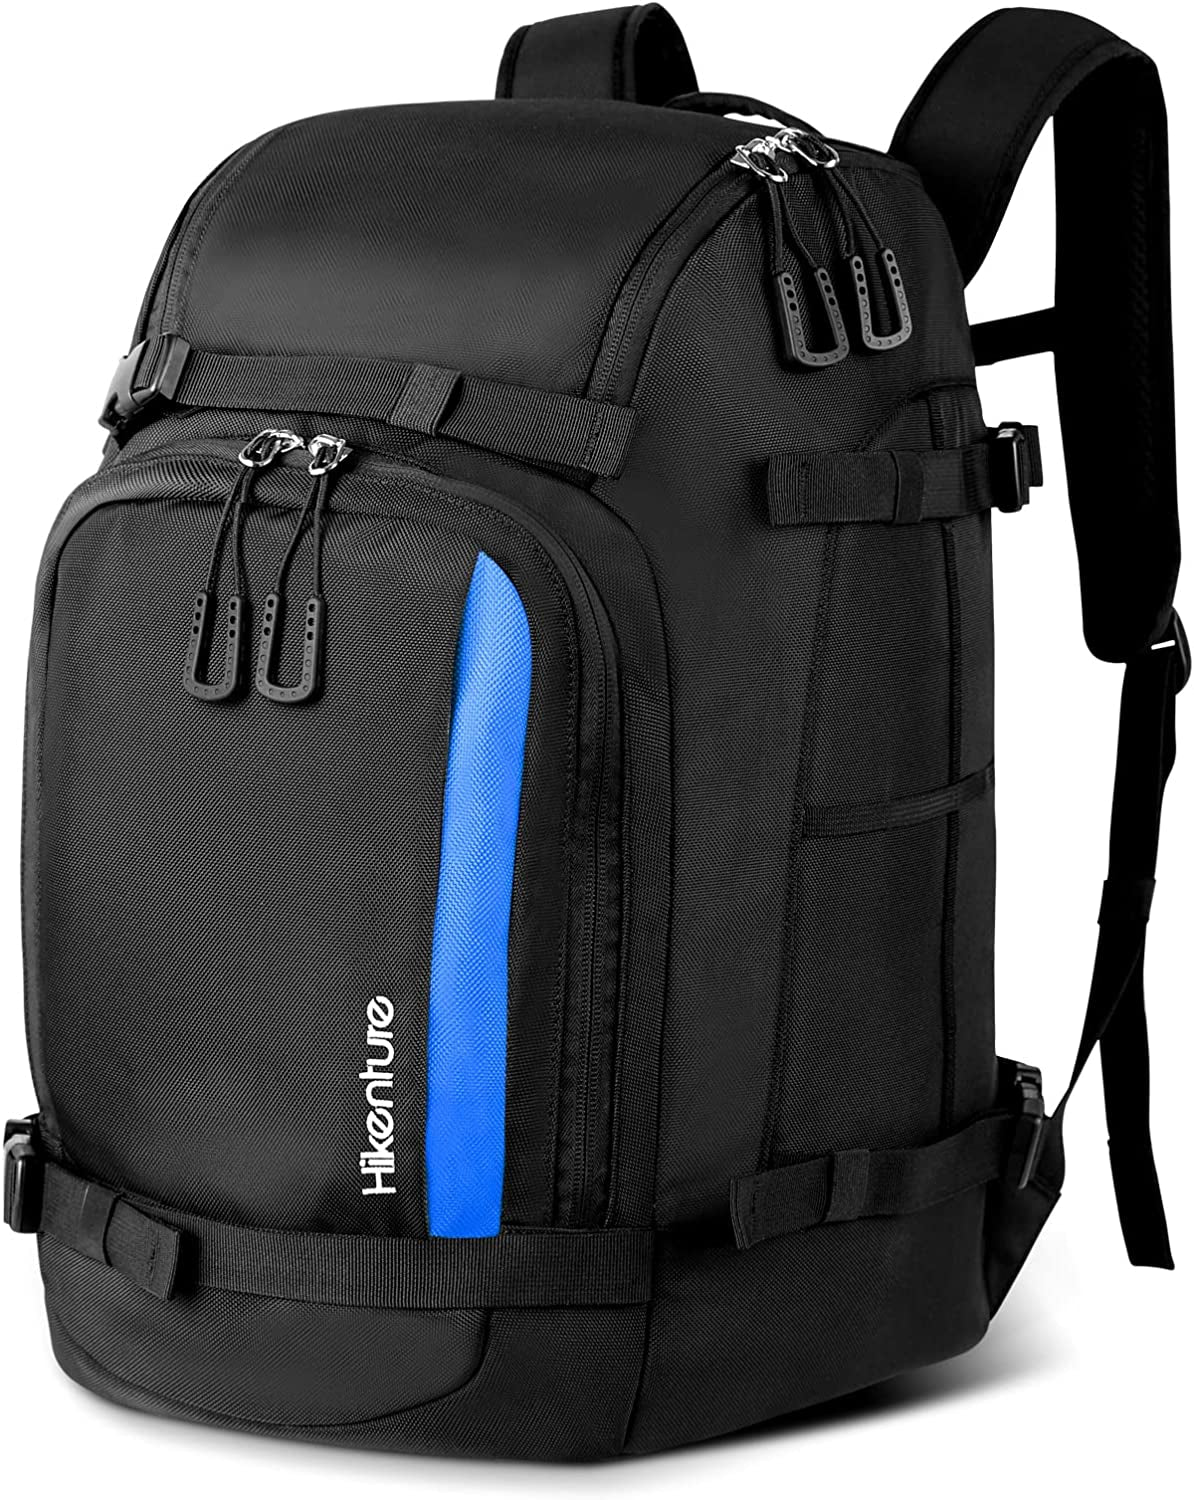 Hikenture Ski Boot Bag Backpack, 50L Padded Ski Bag & Snowboard Boot Bag with Drain Holes, Large Capacity Water-Resistant Ski Travel Bag for Ski Boots, Helmet, Goggles, Clothes, Gloves, Snowboard Gear